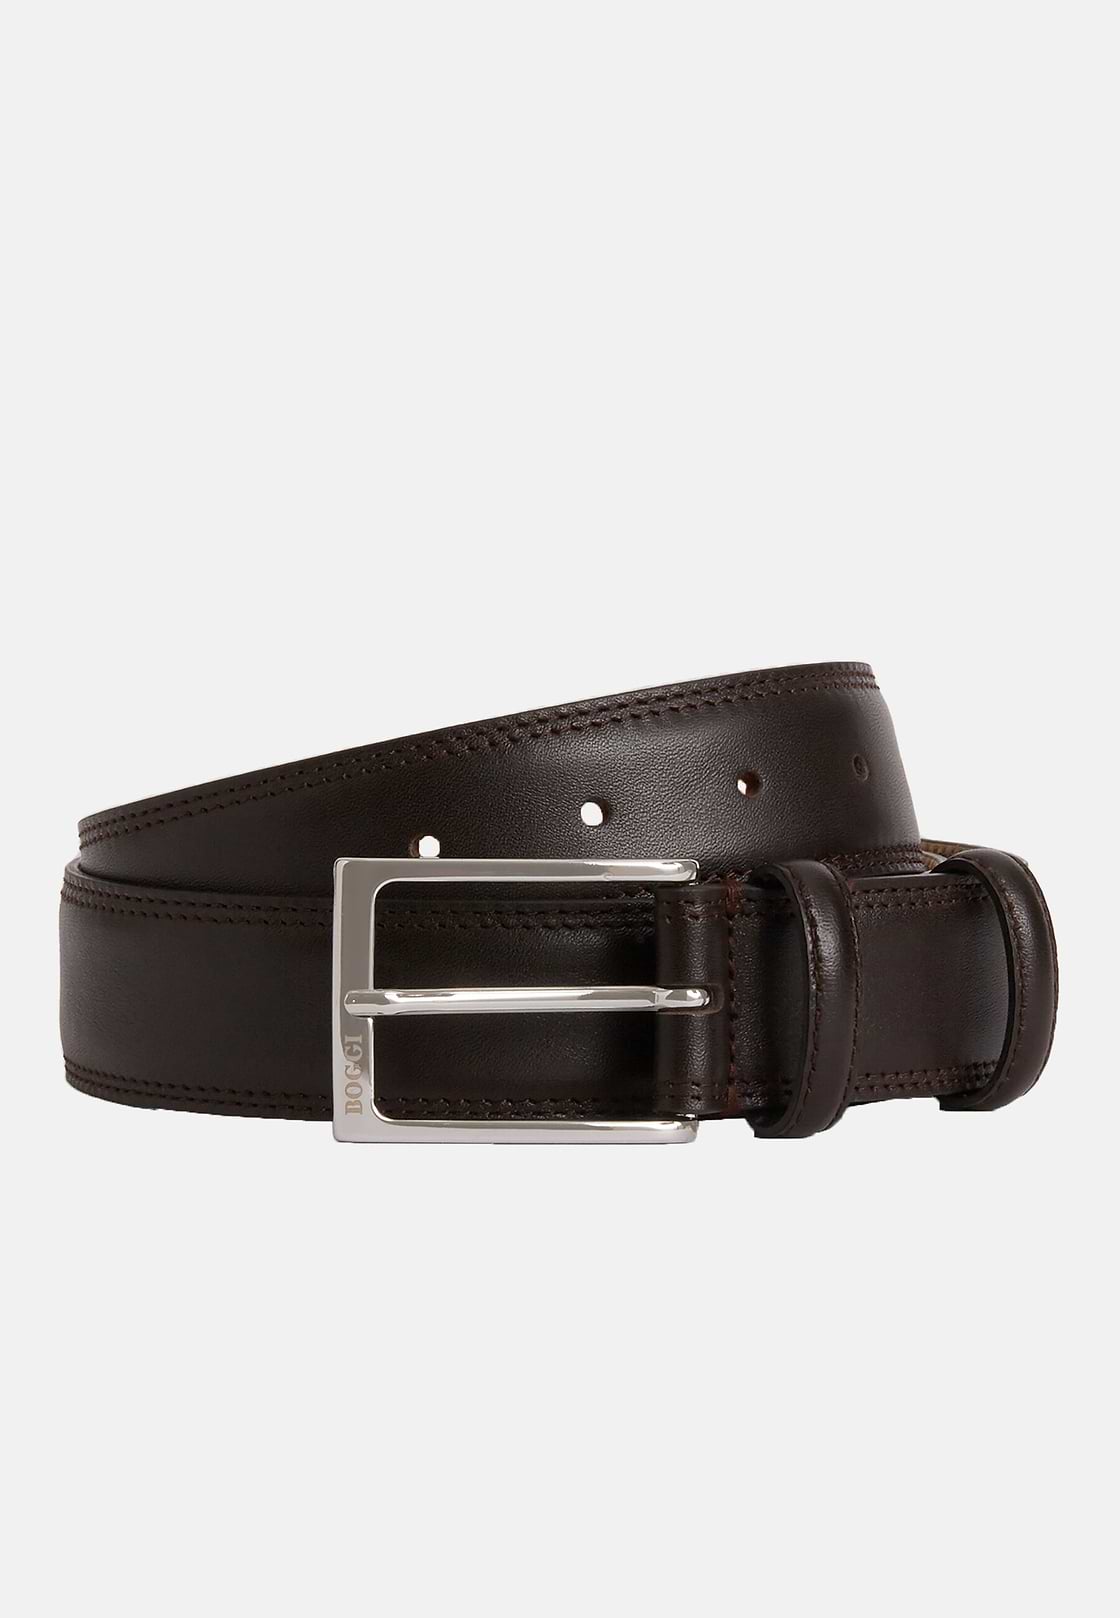 Saddle-stitched Tumbled Leather Belt, Dark brown, hi-res